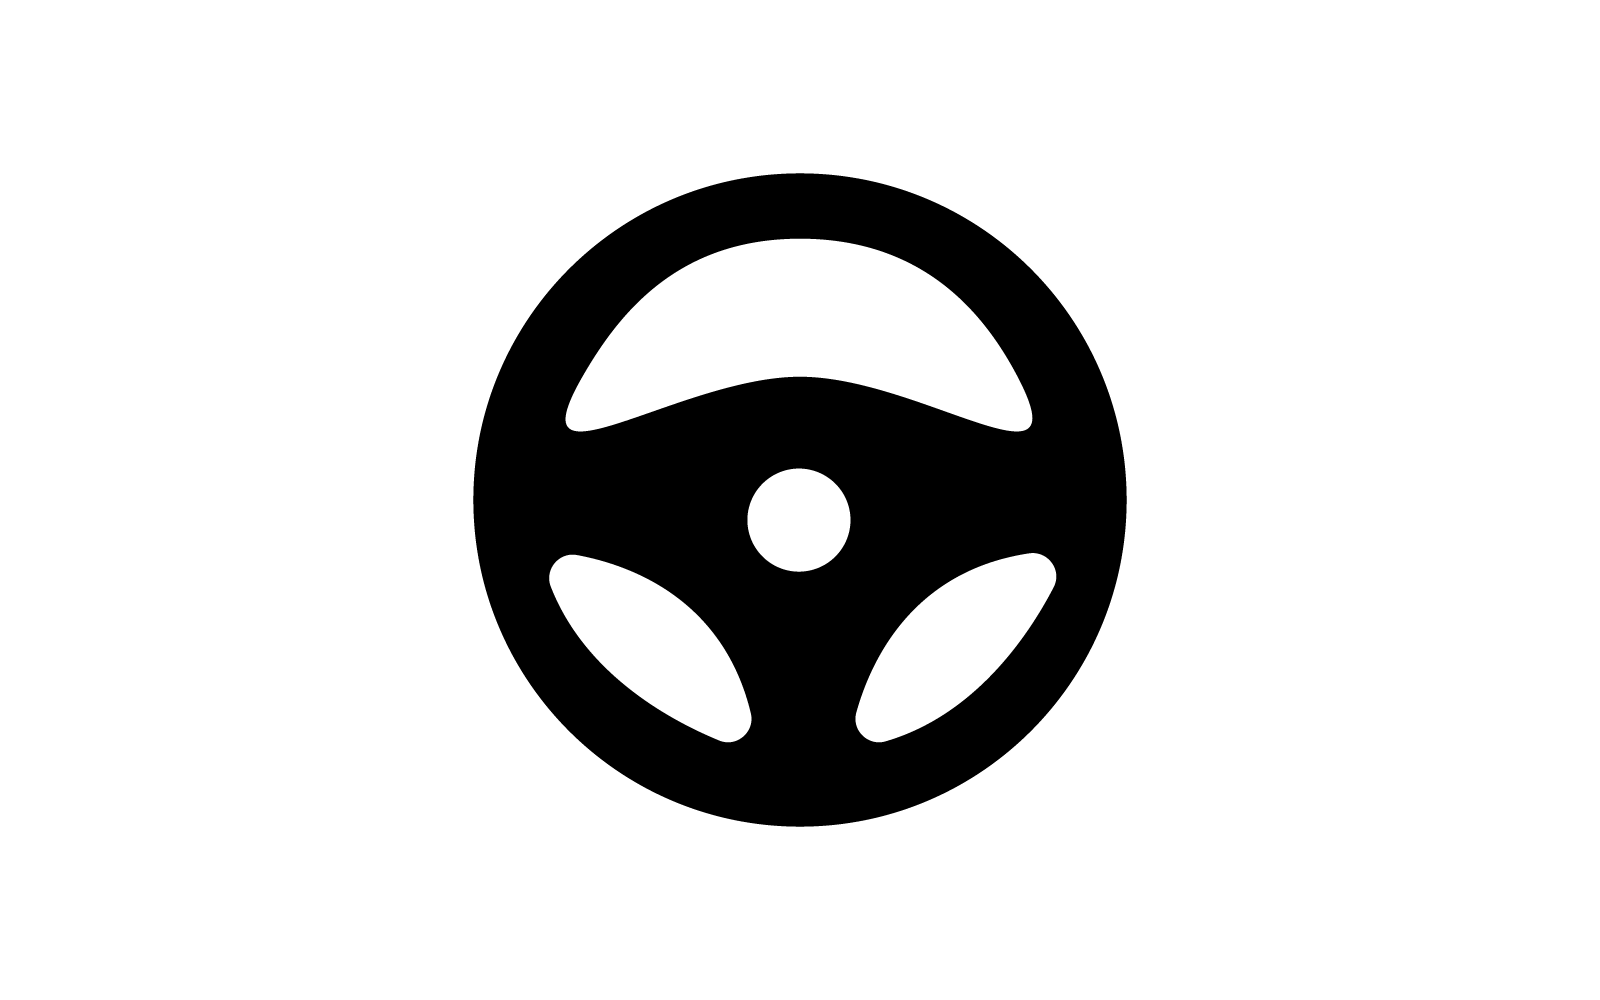 Steering wheel logo vector design template